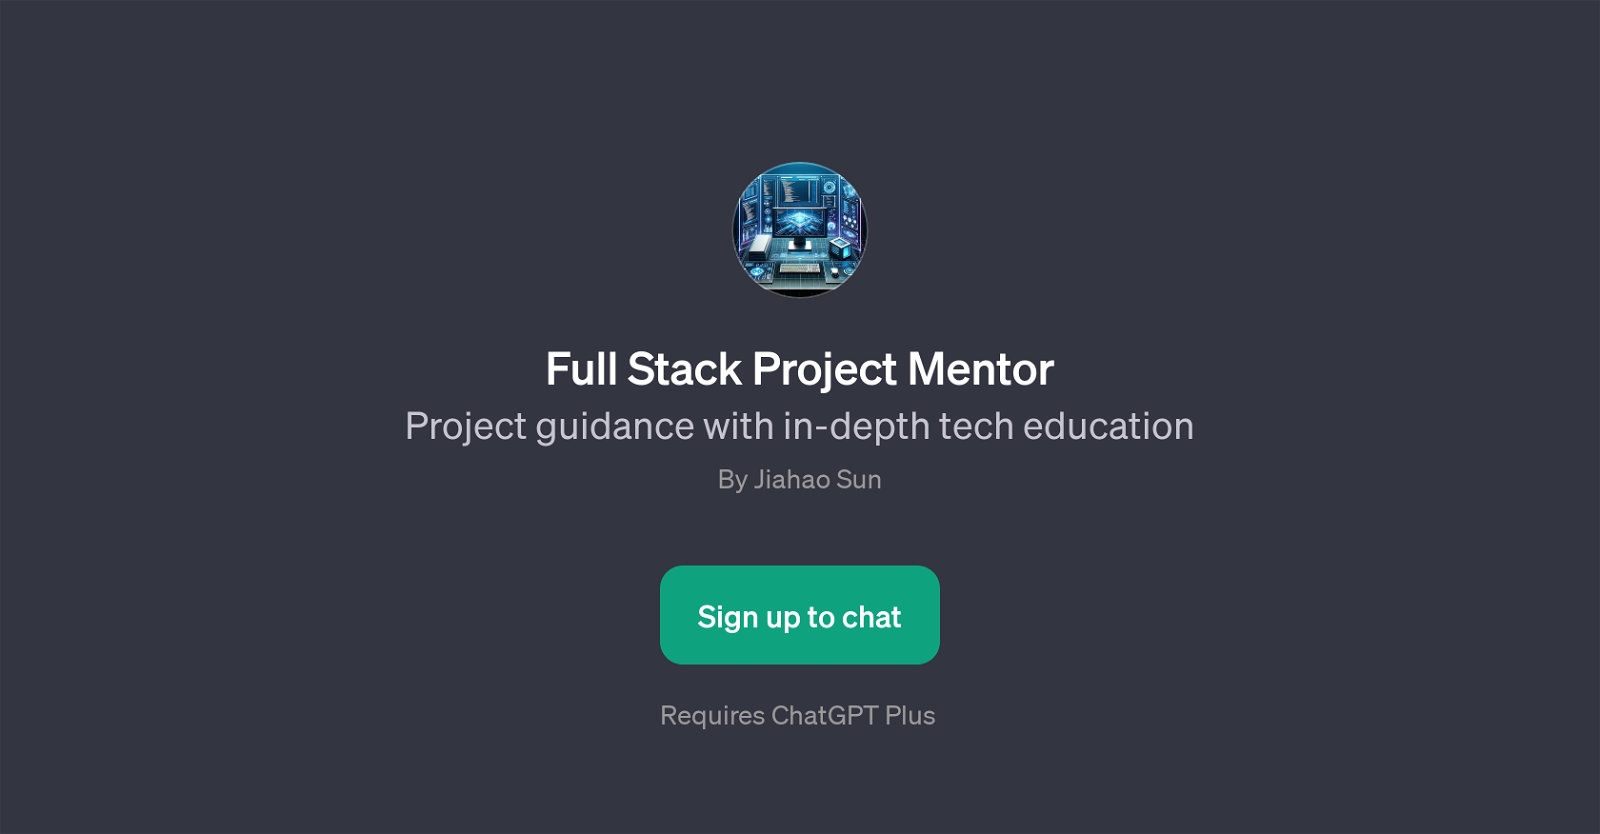 Full Stack Project Mentor website